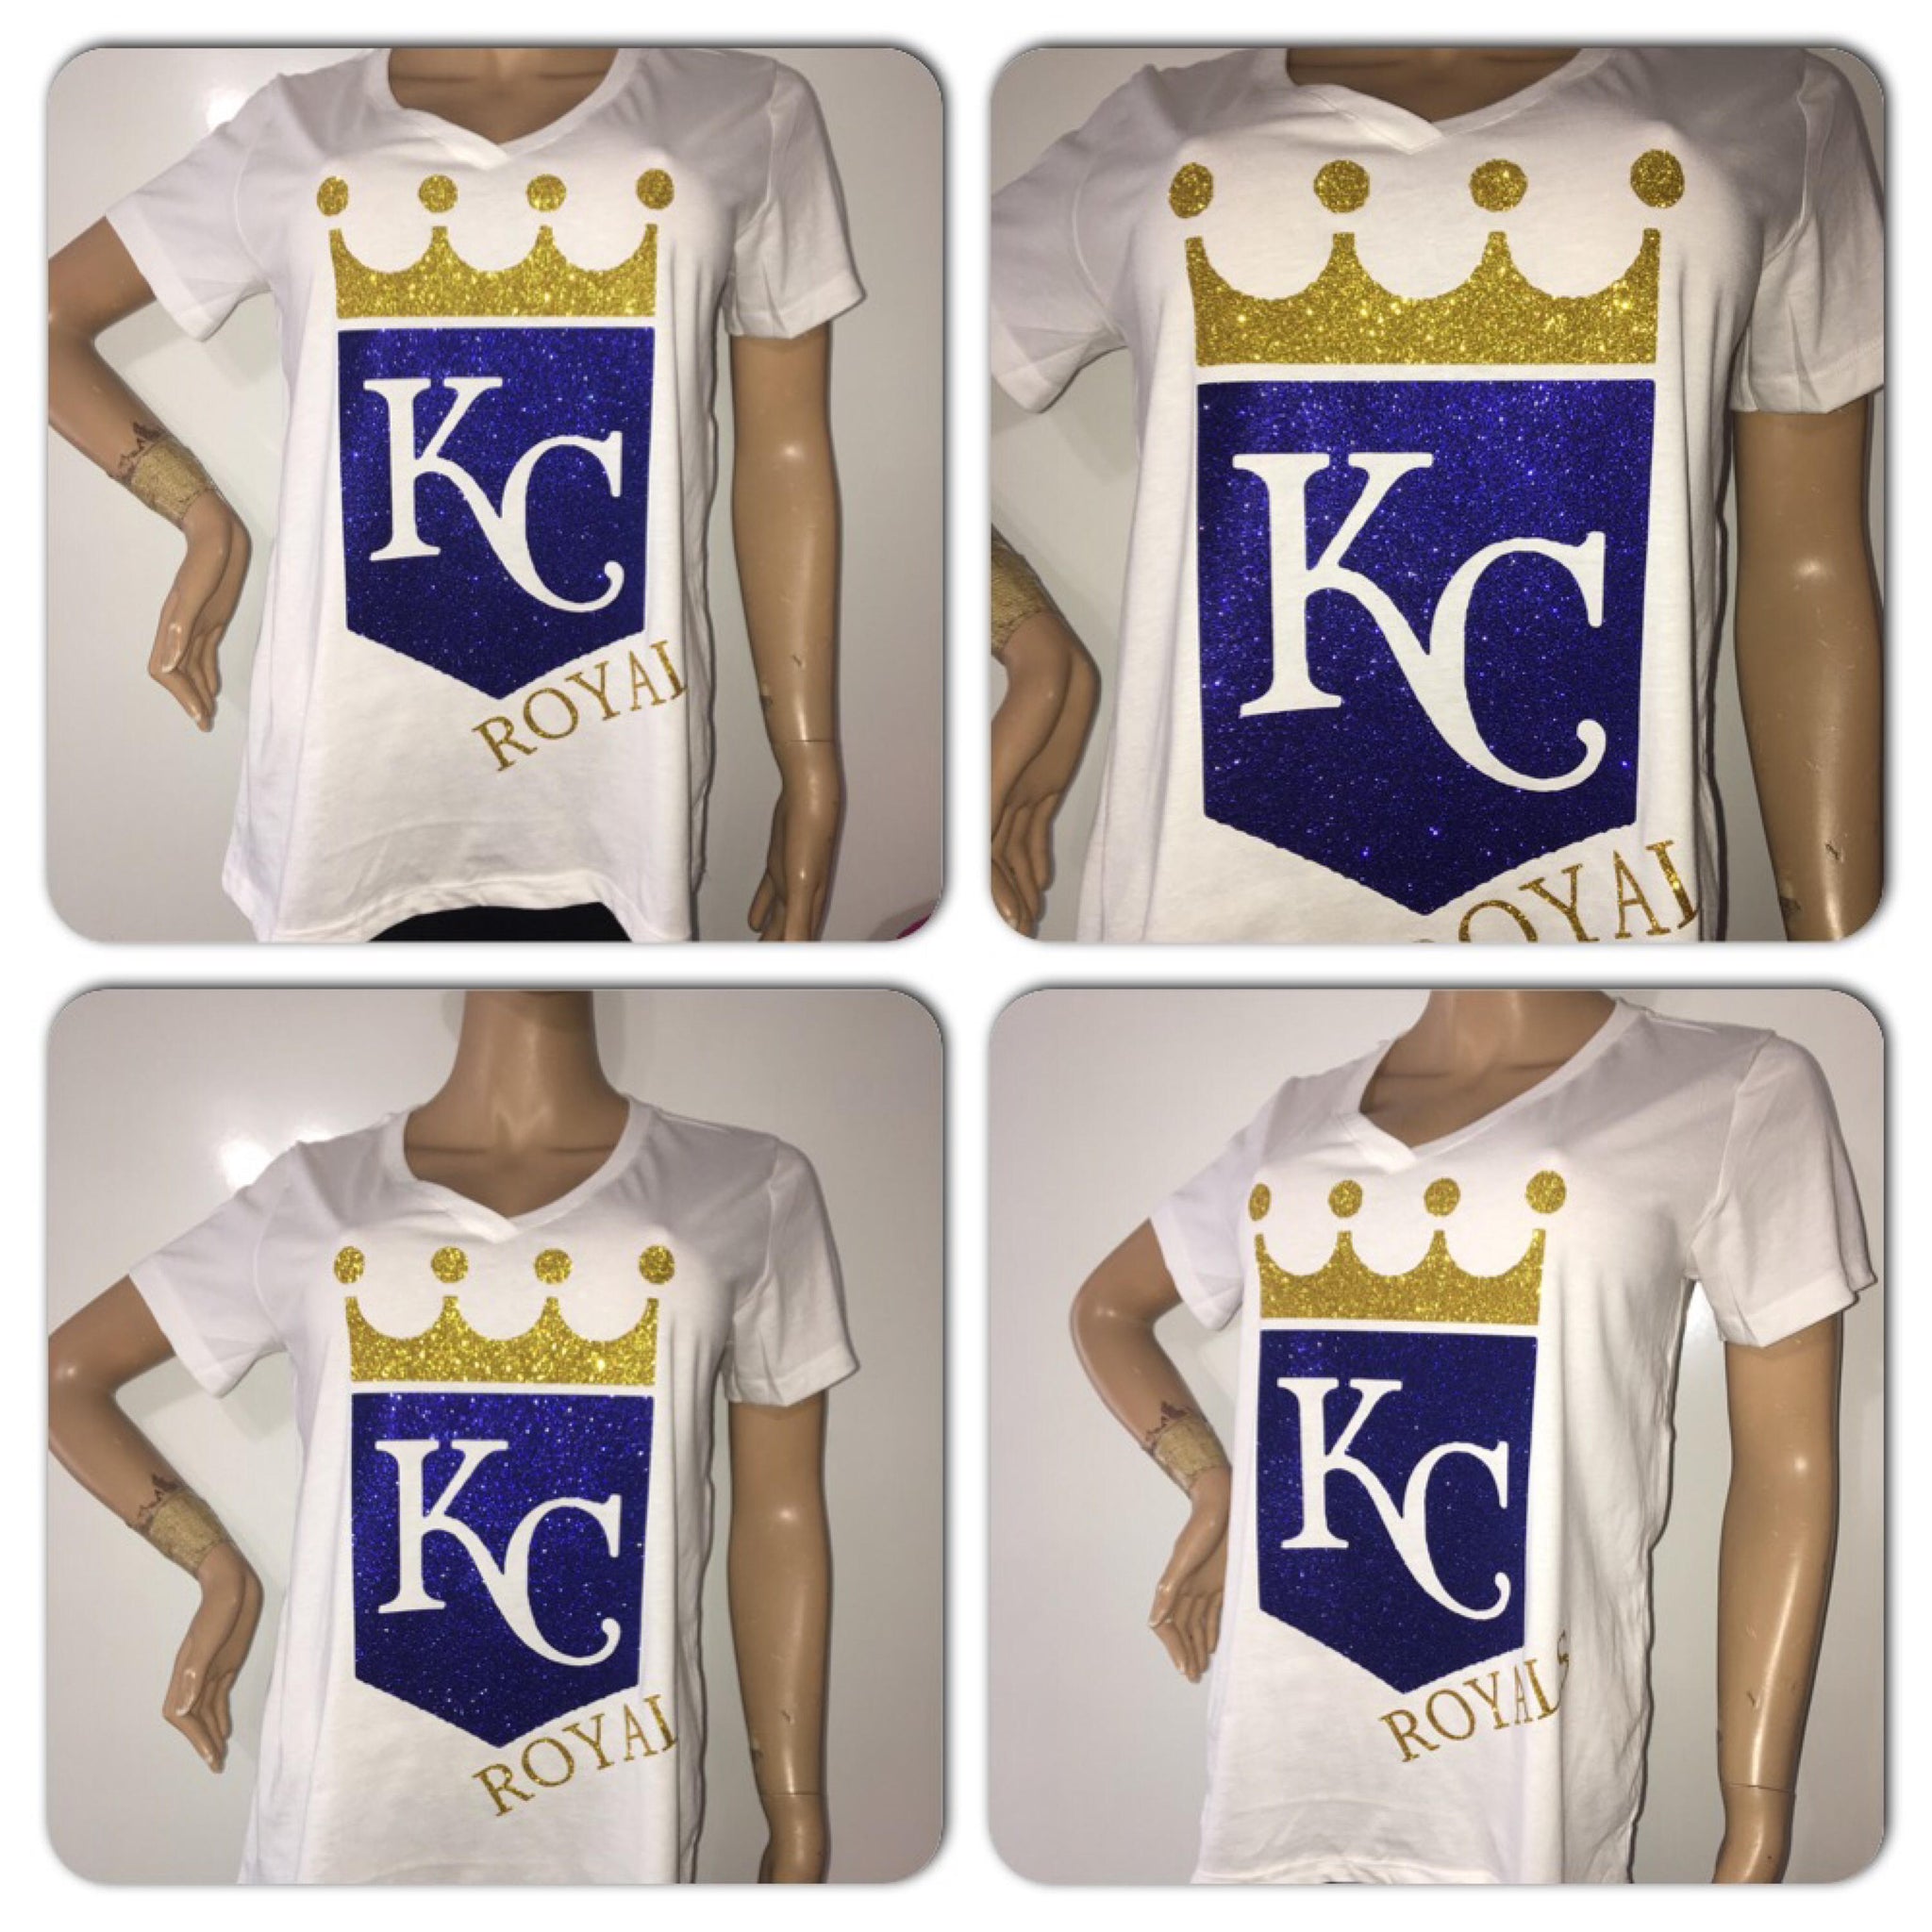 Royals glitter t-shirt | Kansas City royals |